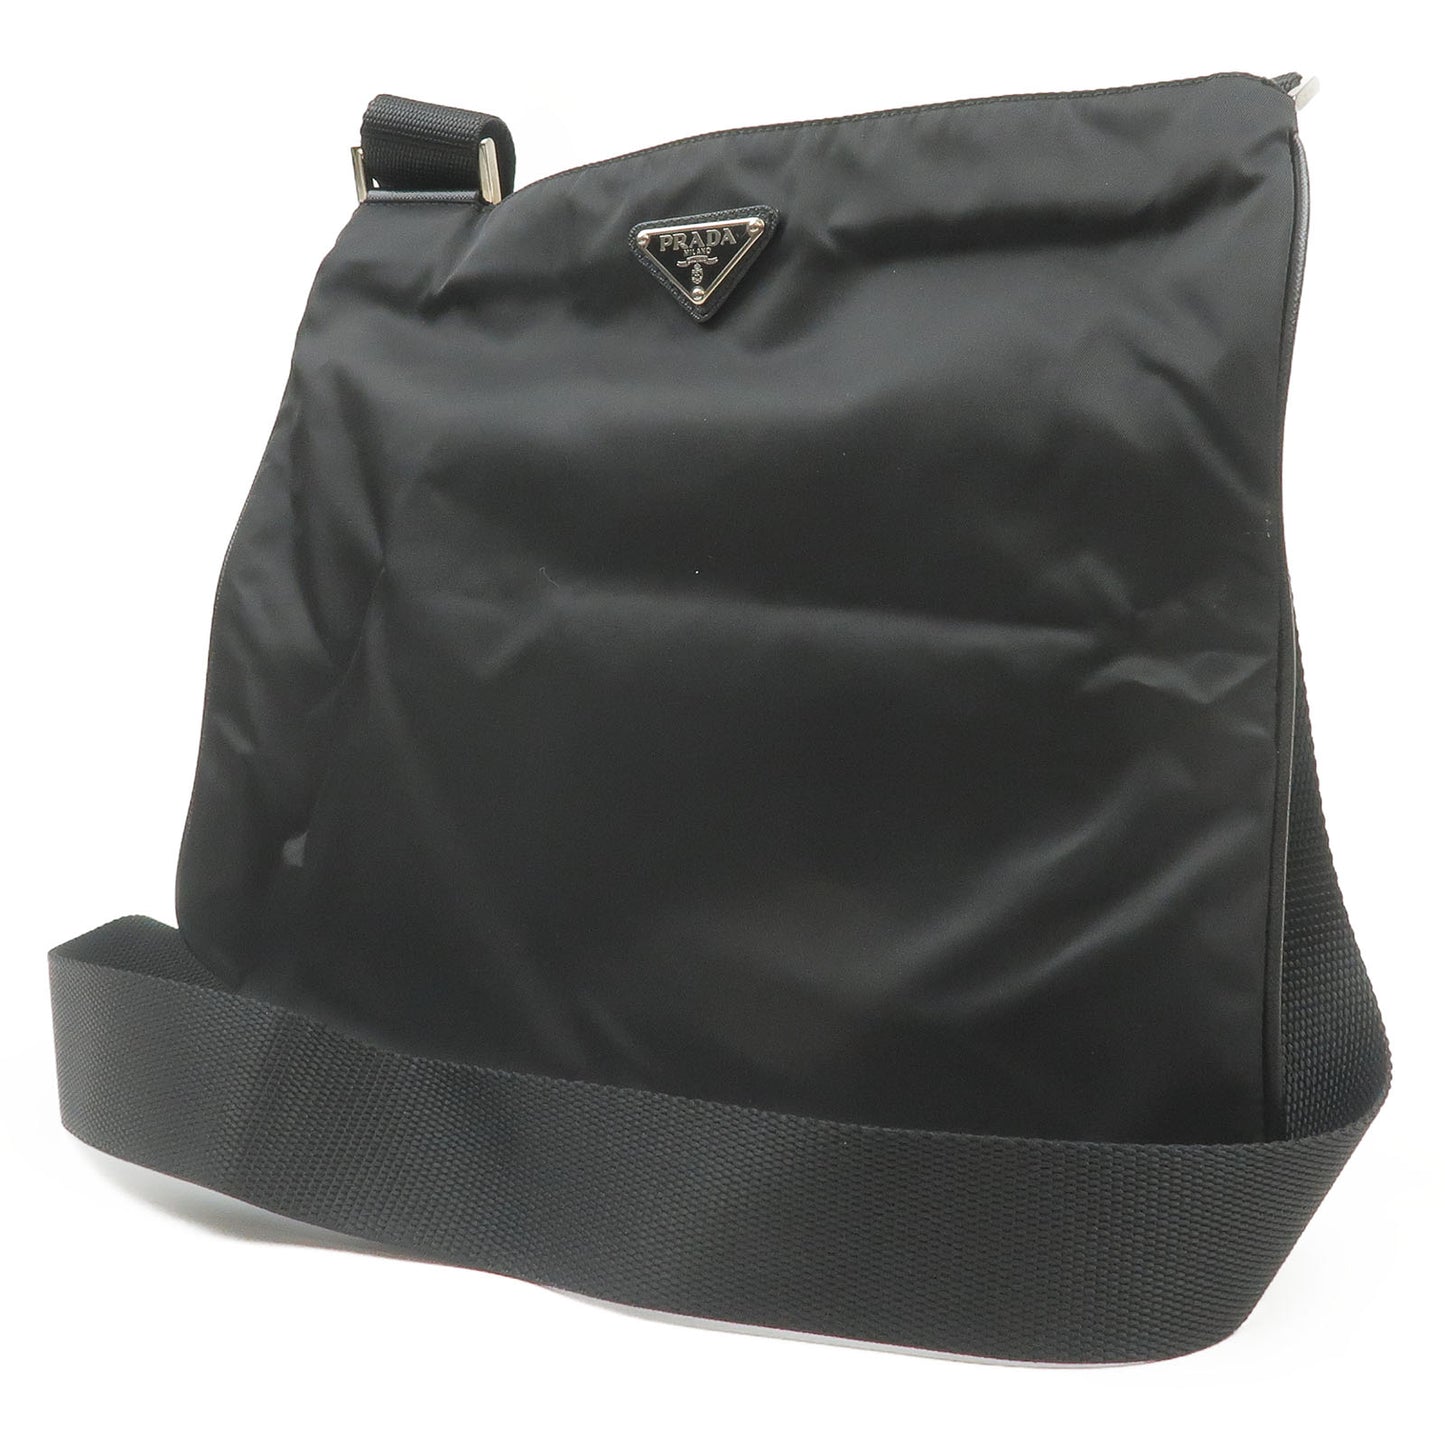 PRADA Nylon Leather Shoulder Bag NERO Black VA0053